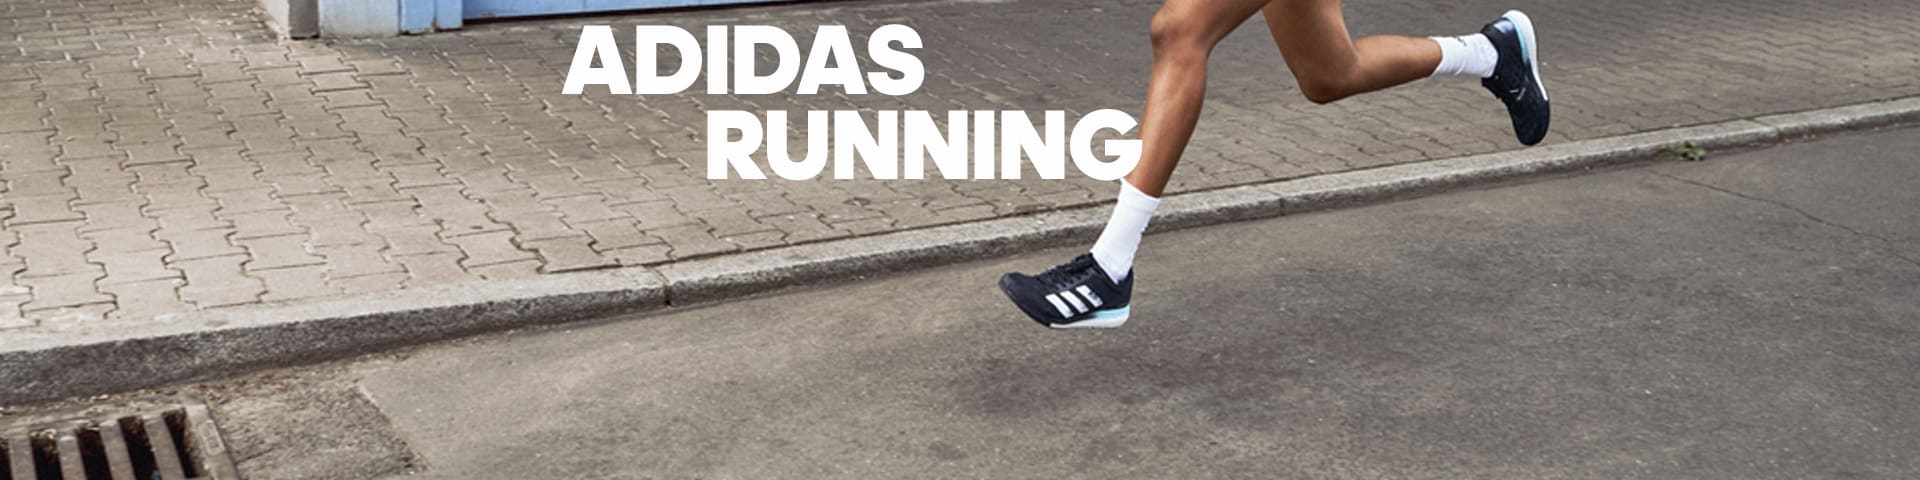 runners need adidas